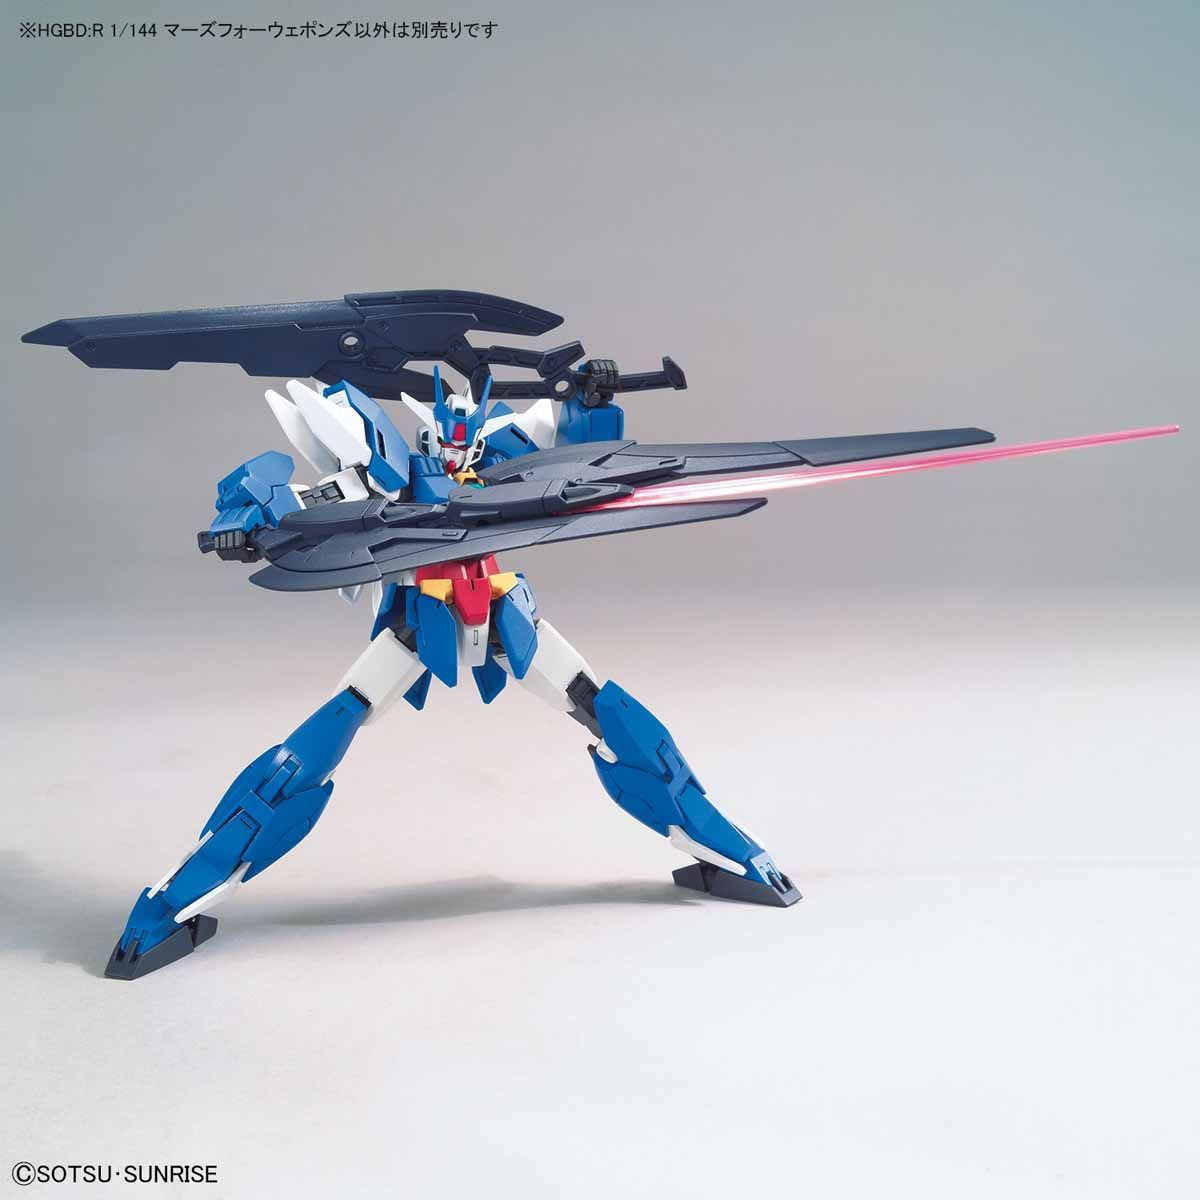 HGBD:R - PFF-X7/M4 Marsfour Gundam Weapons